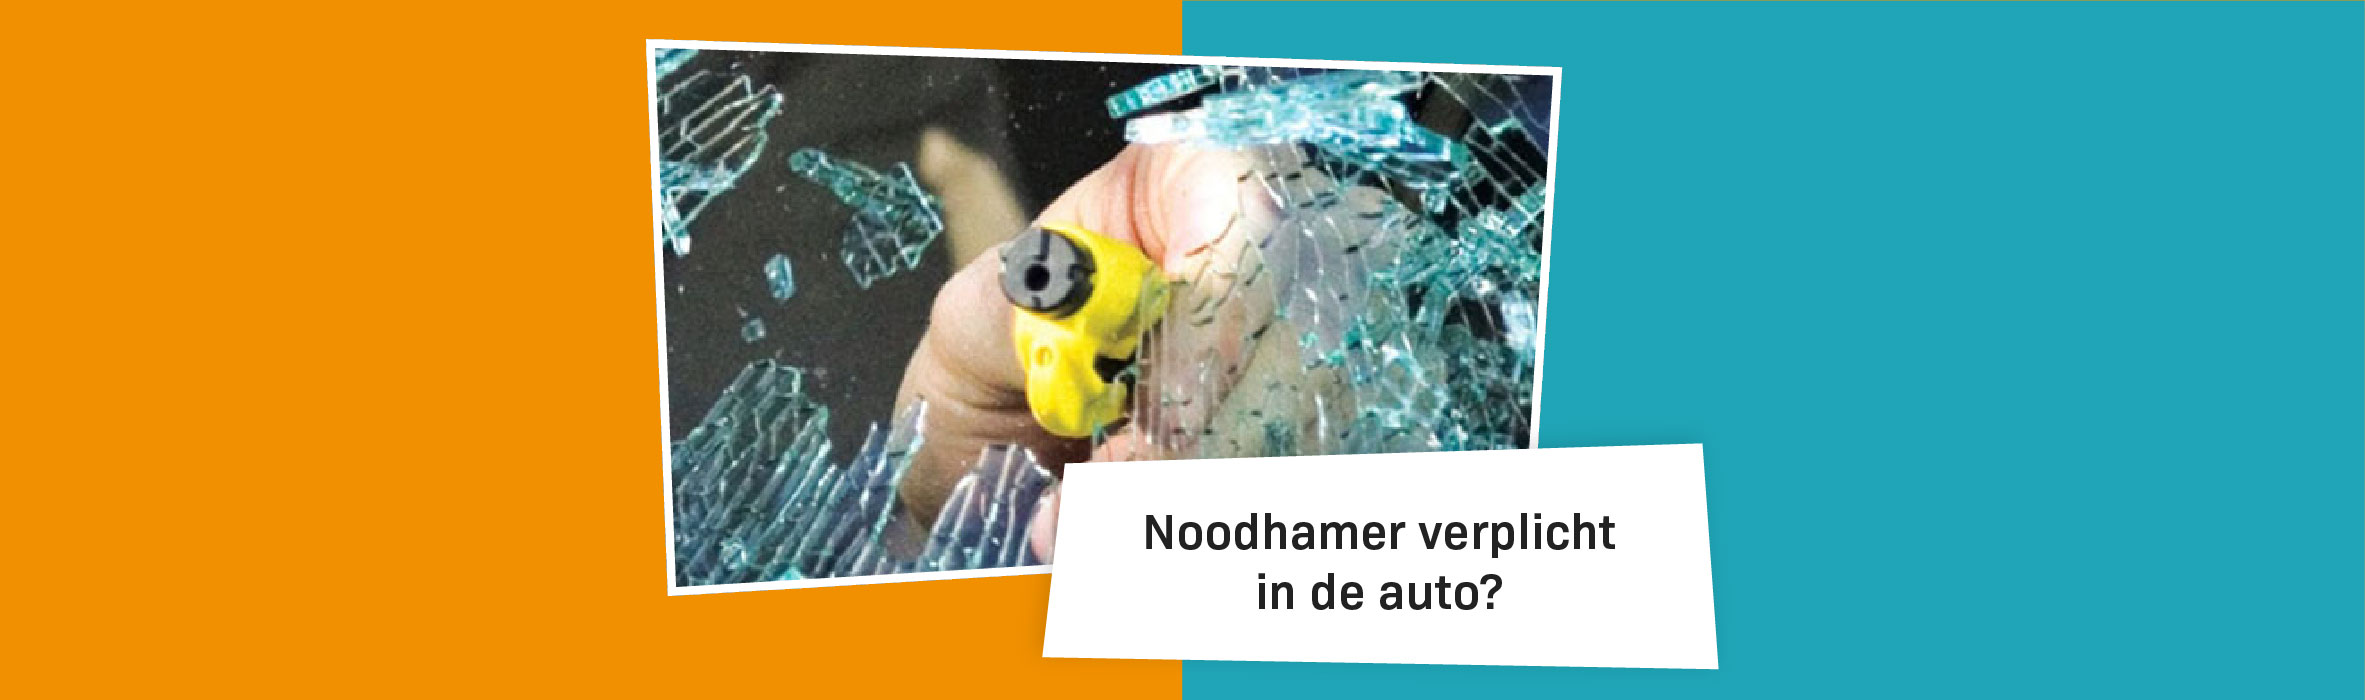 https://www.webshop-outlet.nl/wp-content/uploads/2017/12/Noodhamer-verplicht-in-de-auto.jpg